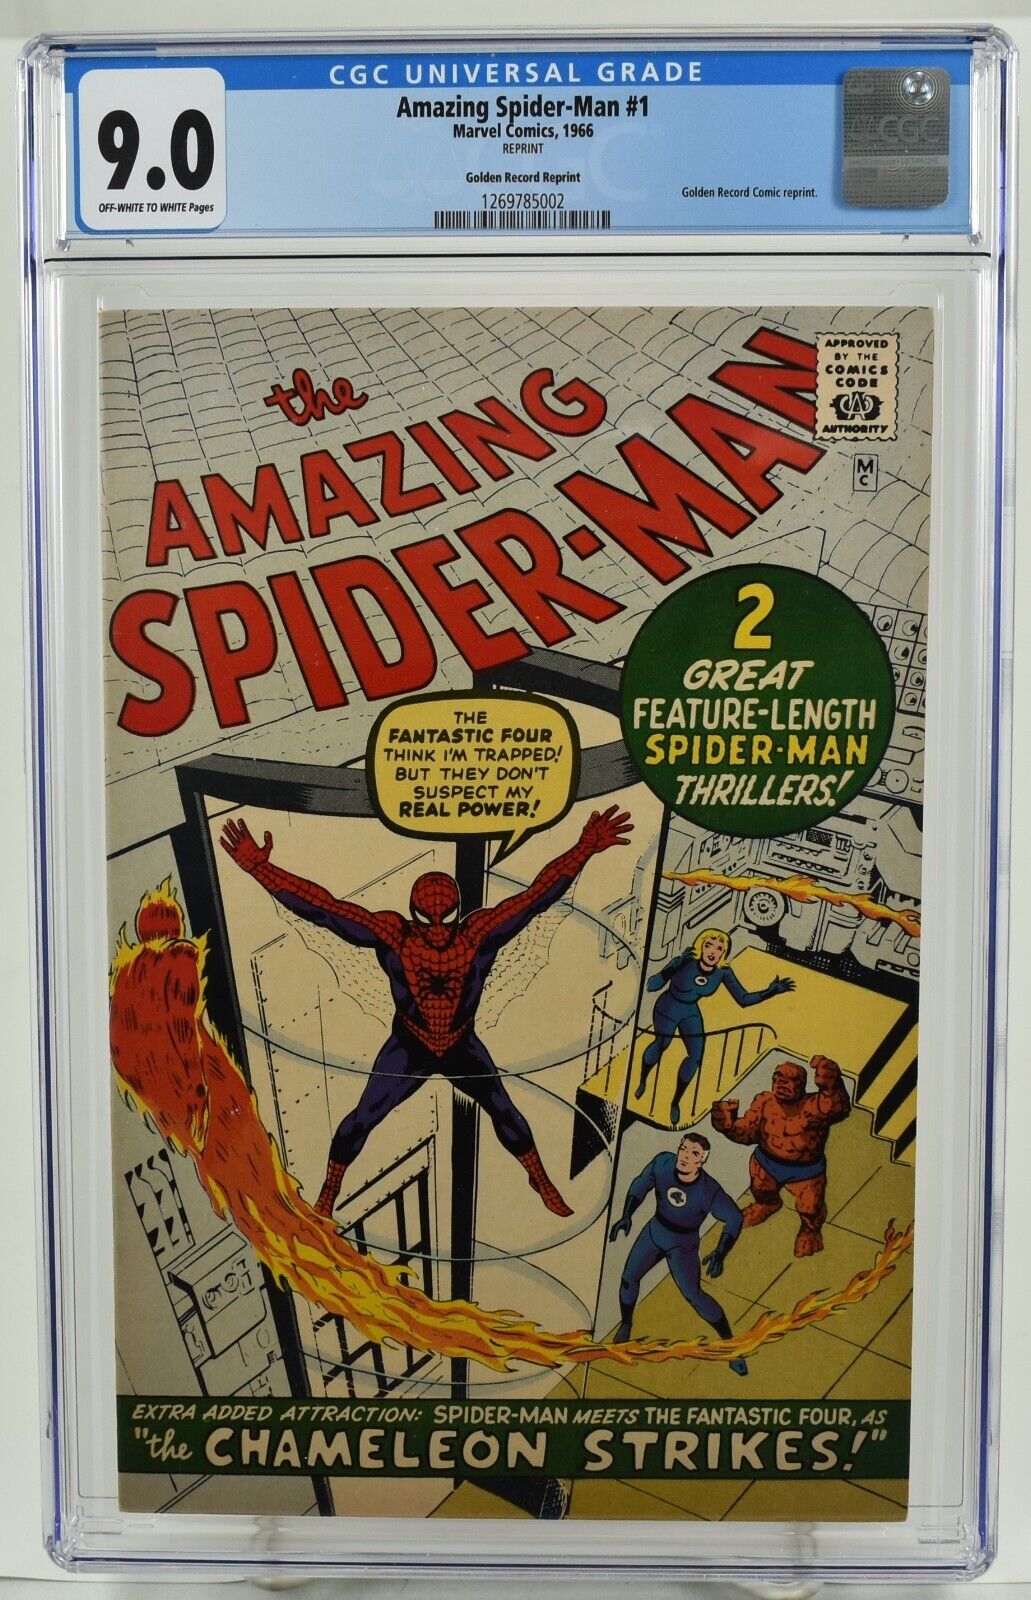 Amazing Spider-Man #1 Golden Record Reprint CGC 9.0 (1966) Marvel Comics